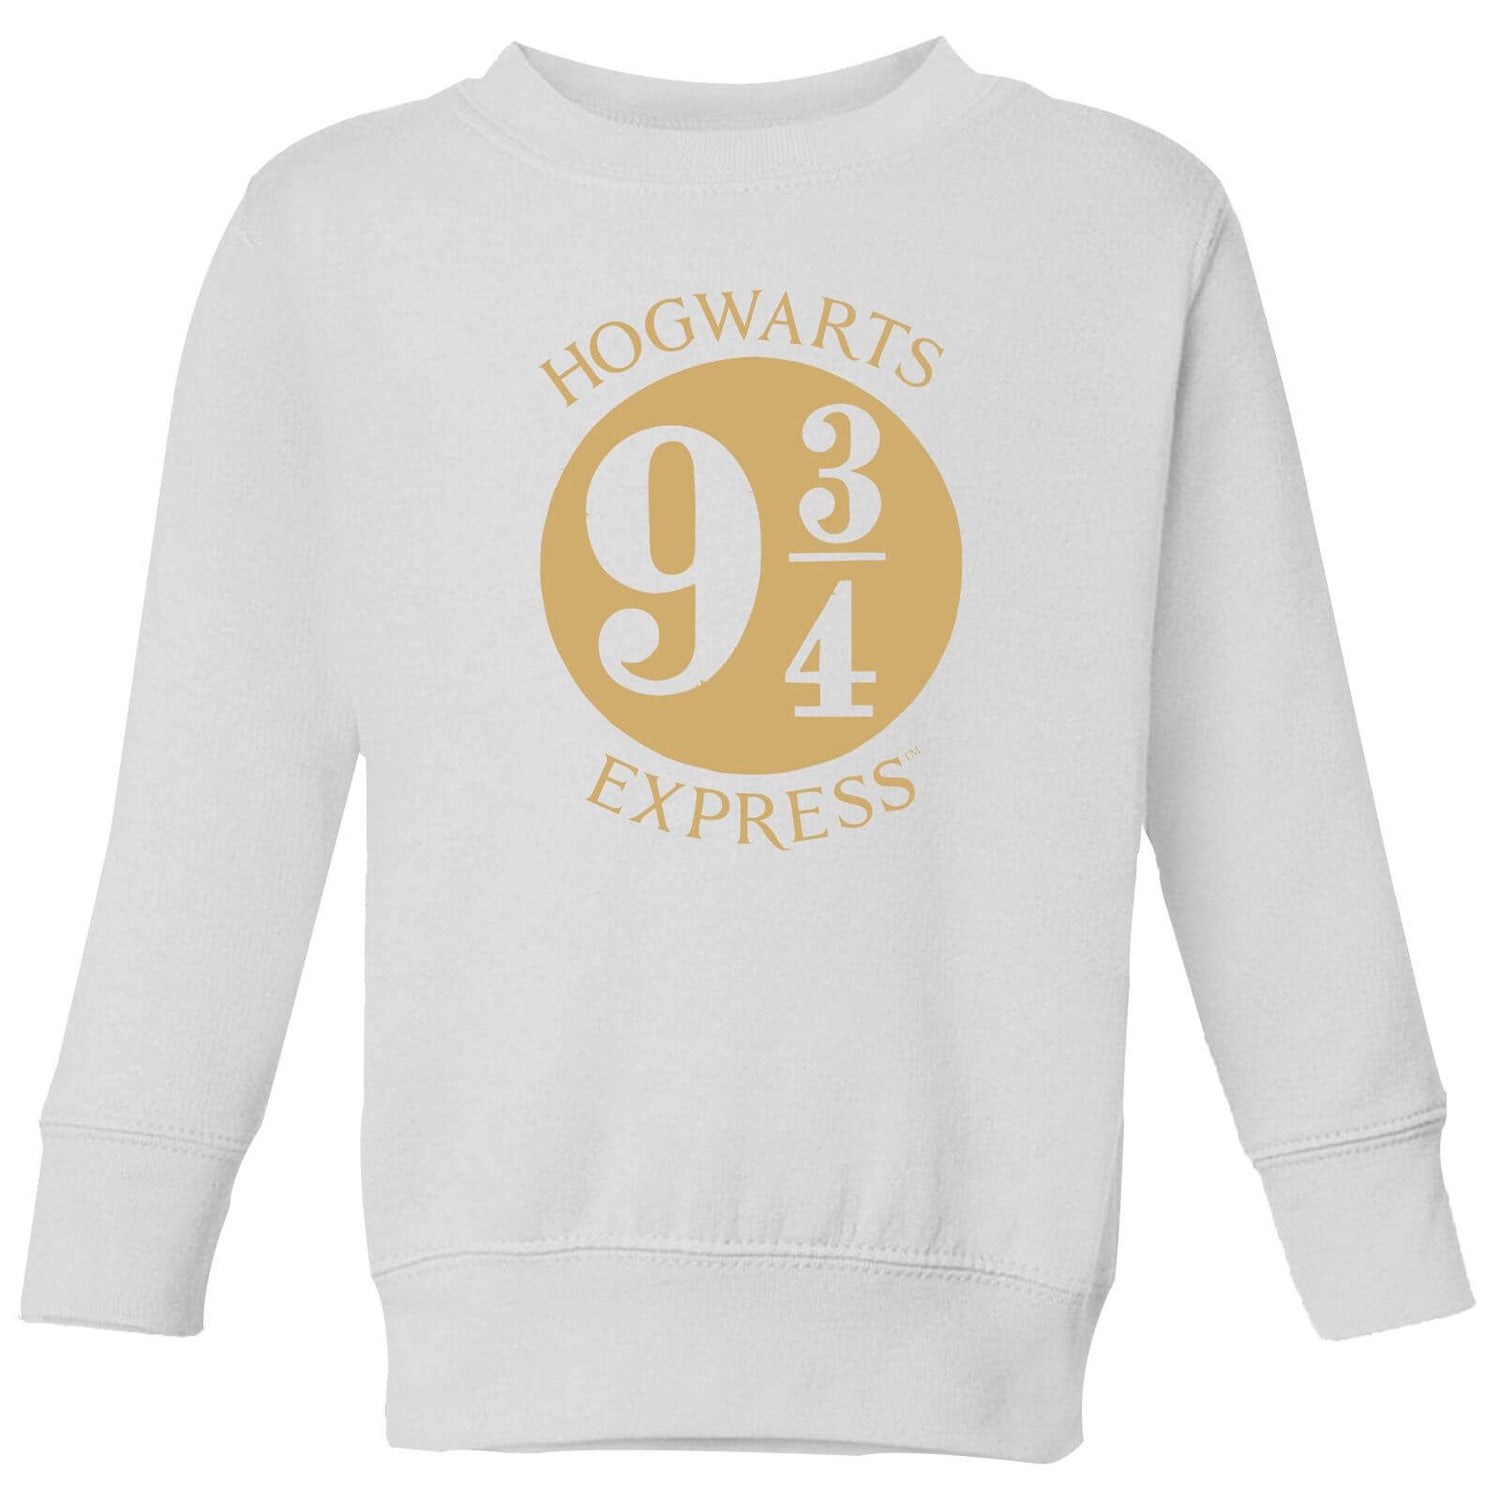 Harry Potter Platform Kids' Sweatshirt - White